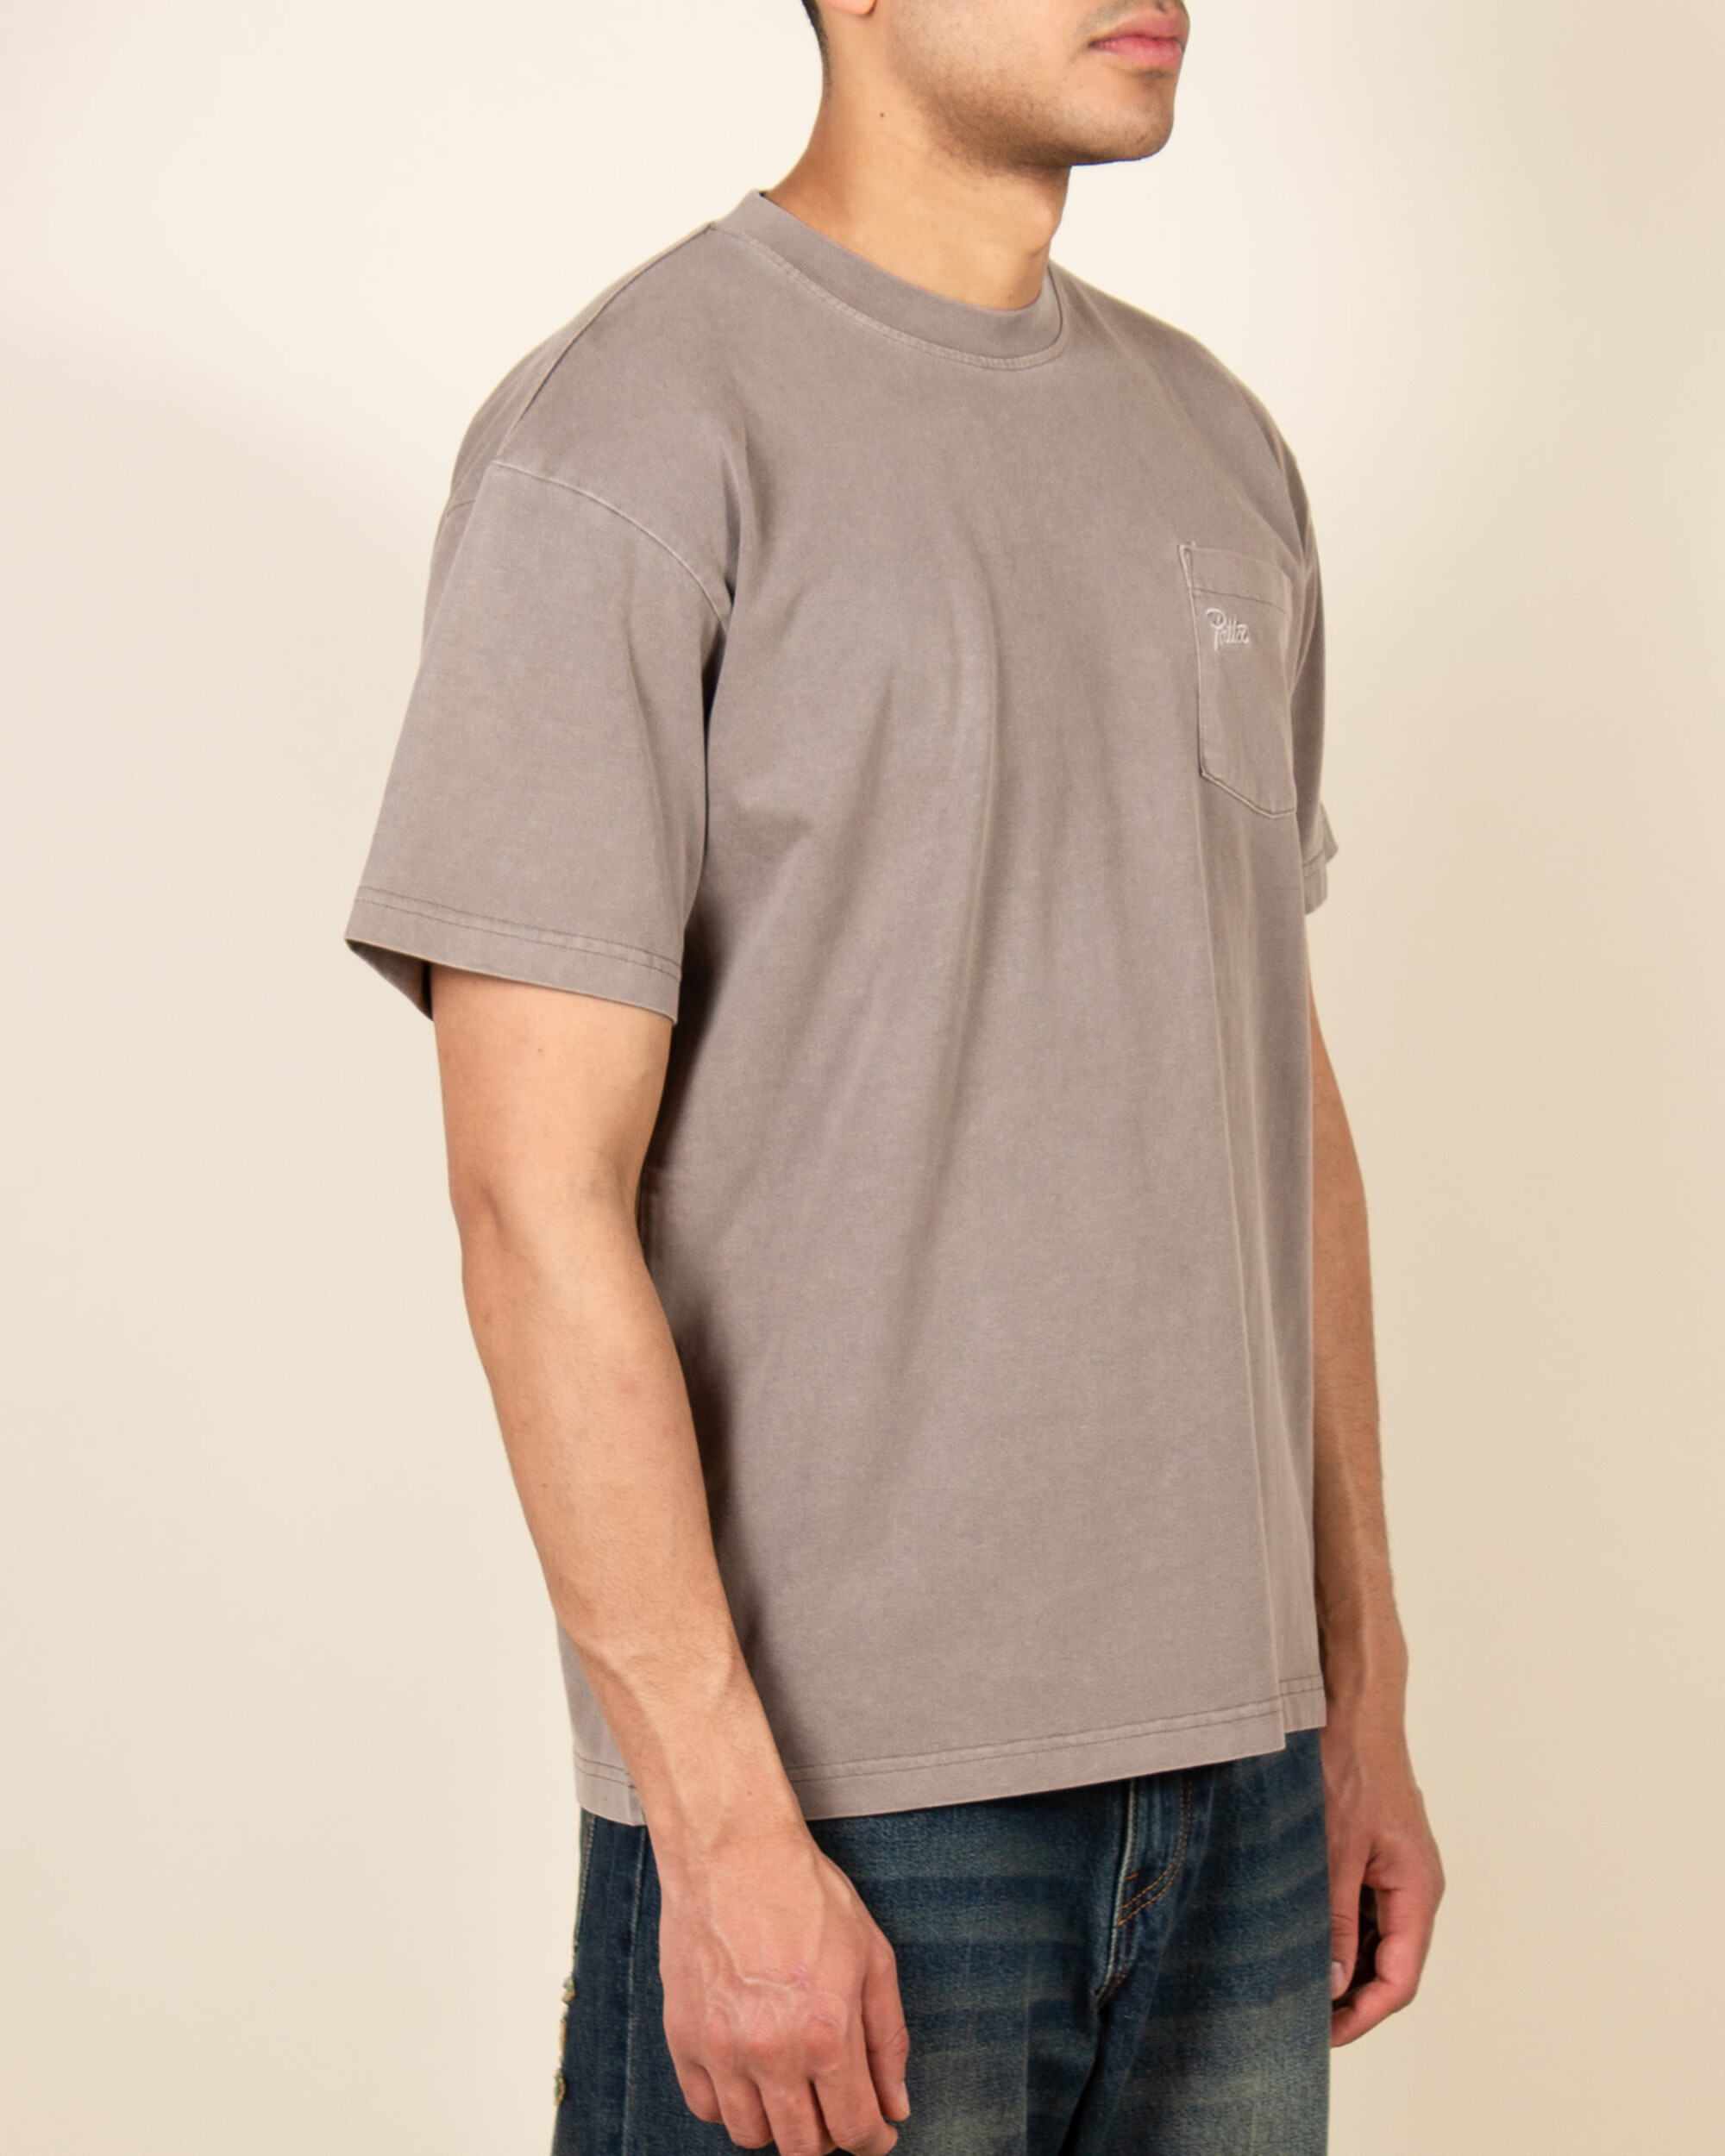 Patta Basic Pocket T-Shirt - Driftwood